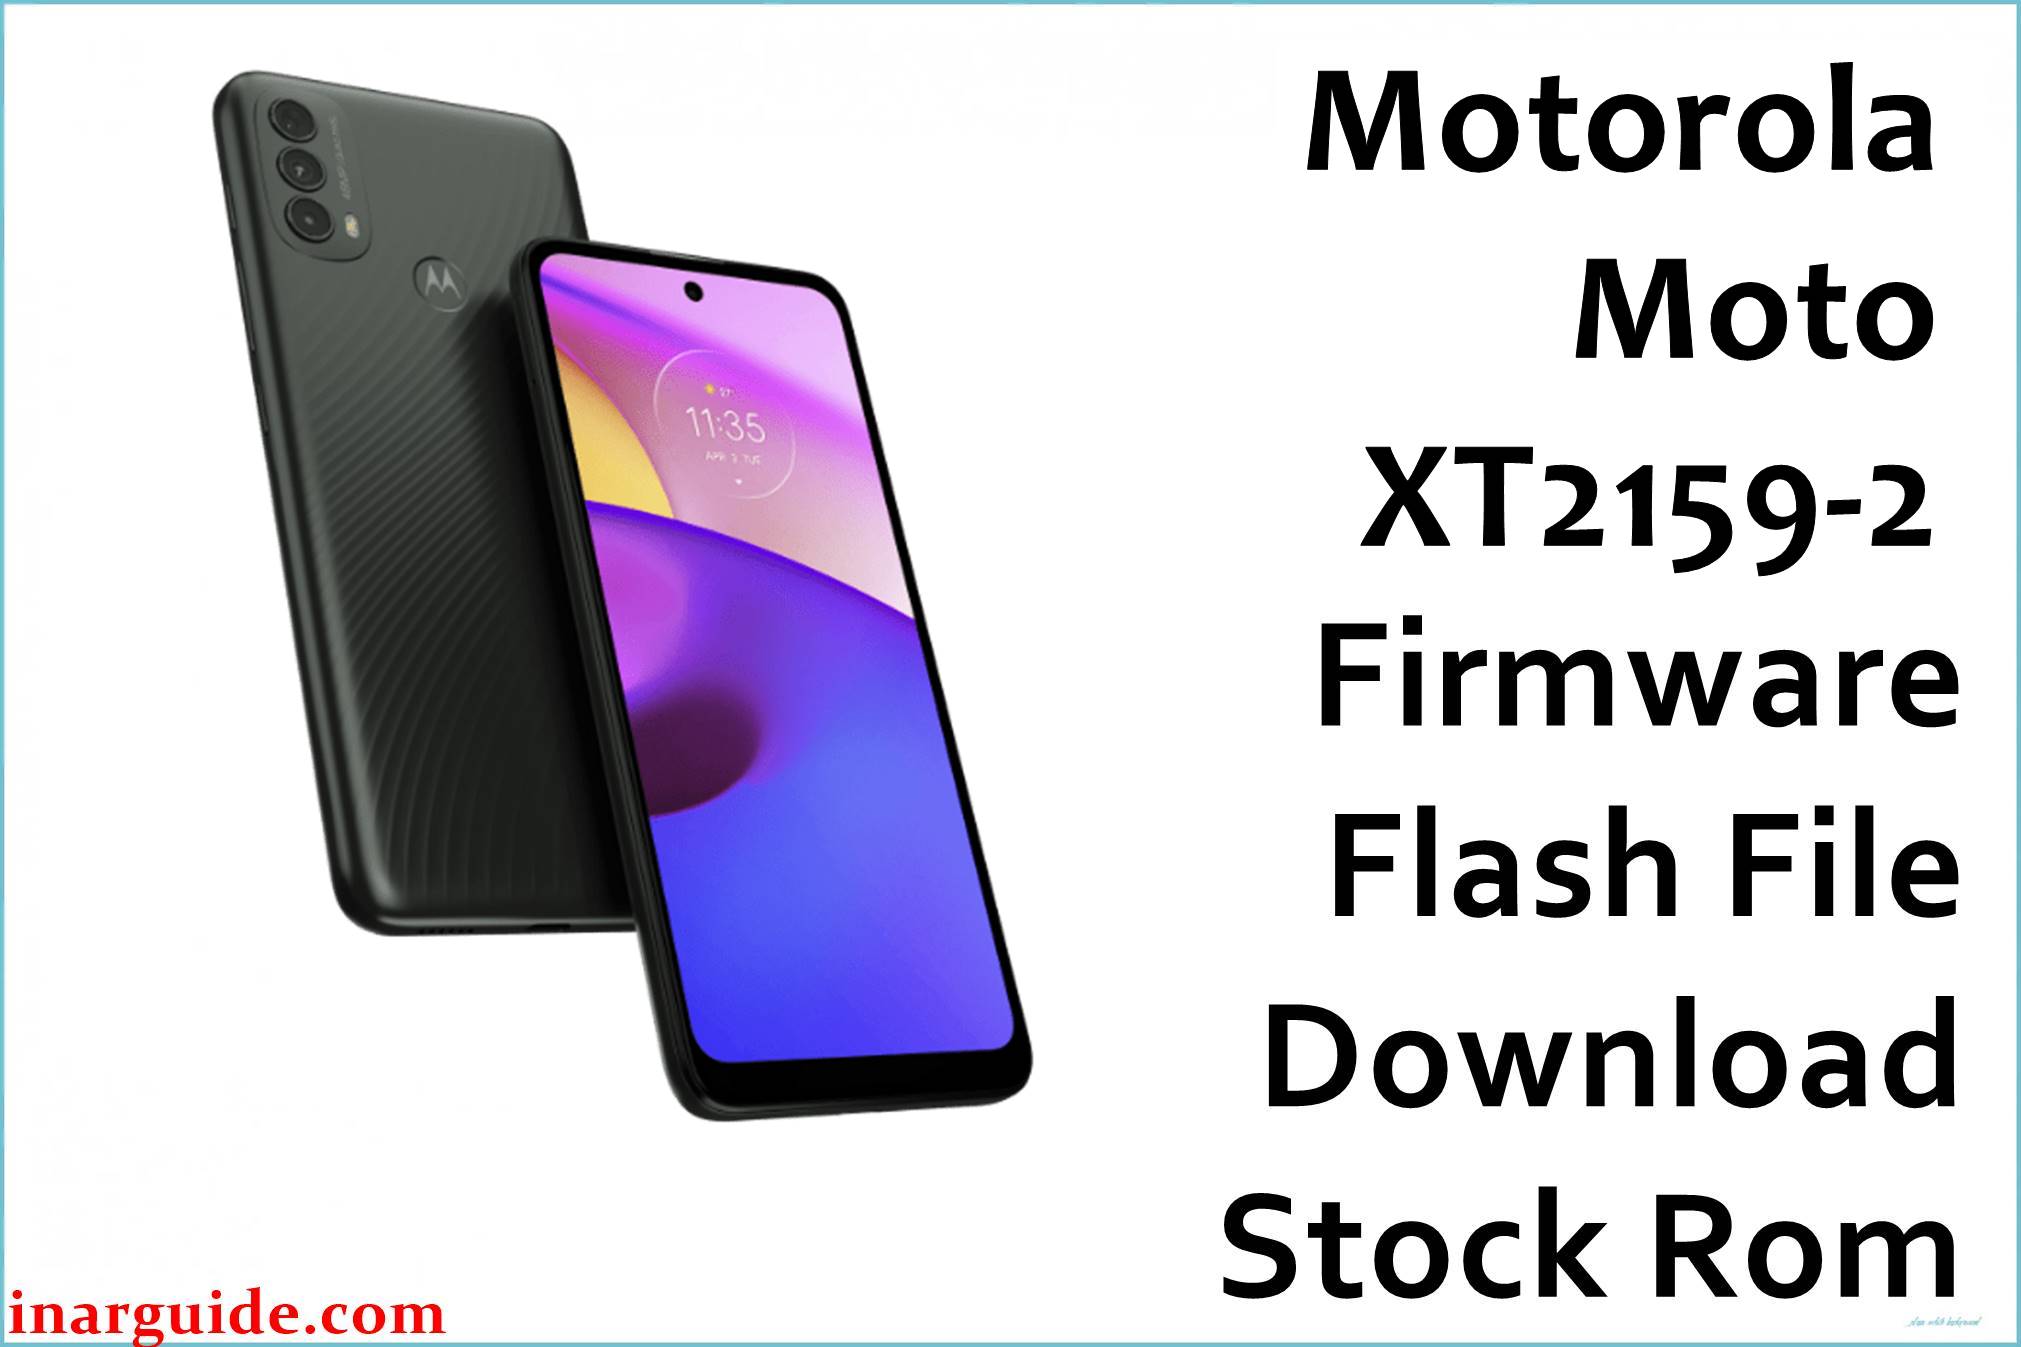 Motorola Moto XT2159-2